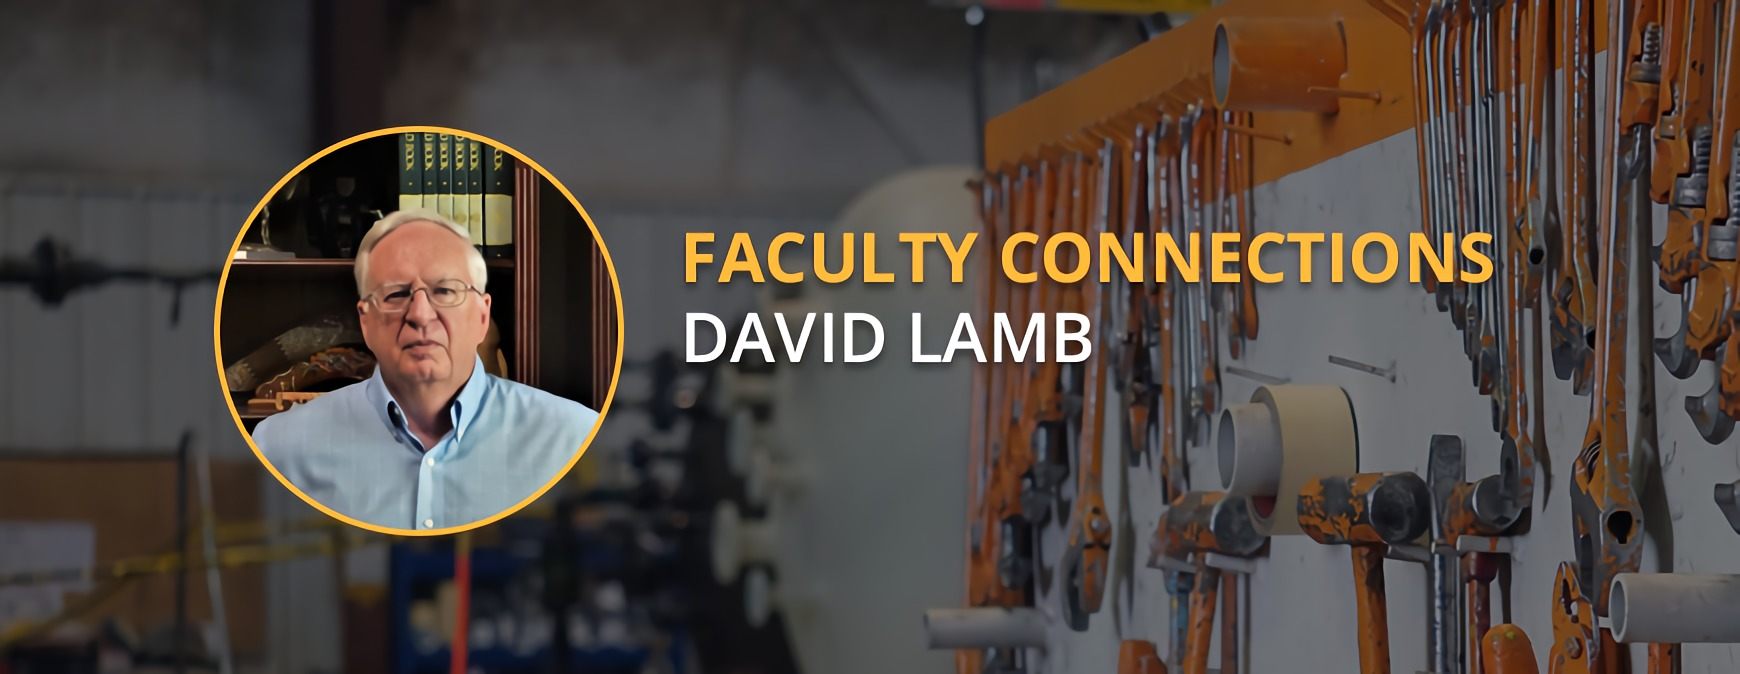 David Lamb Faculty Connections